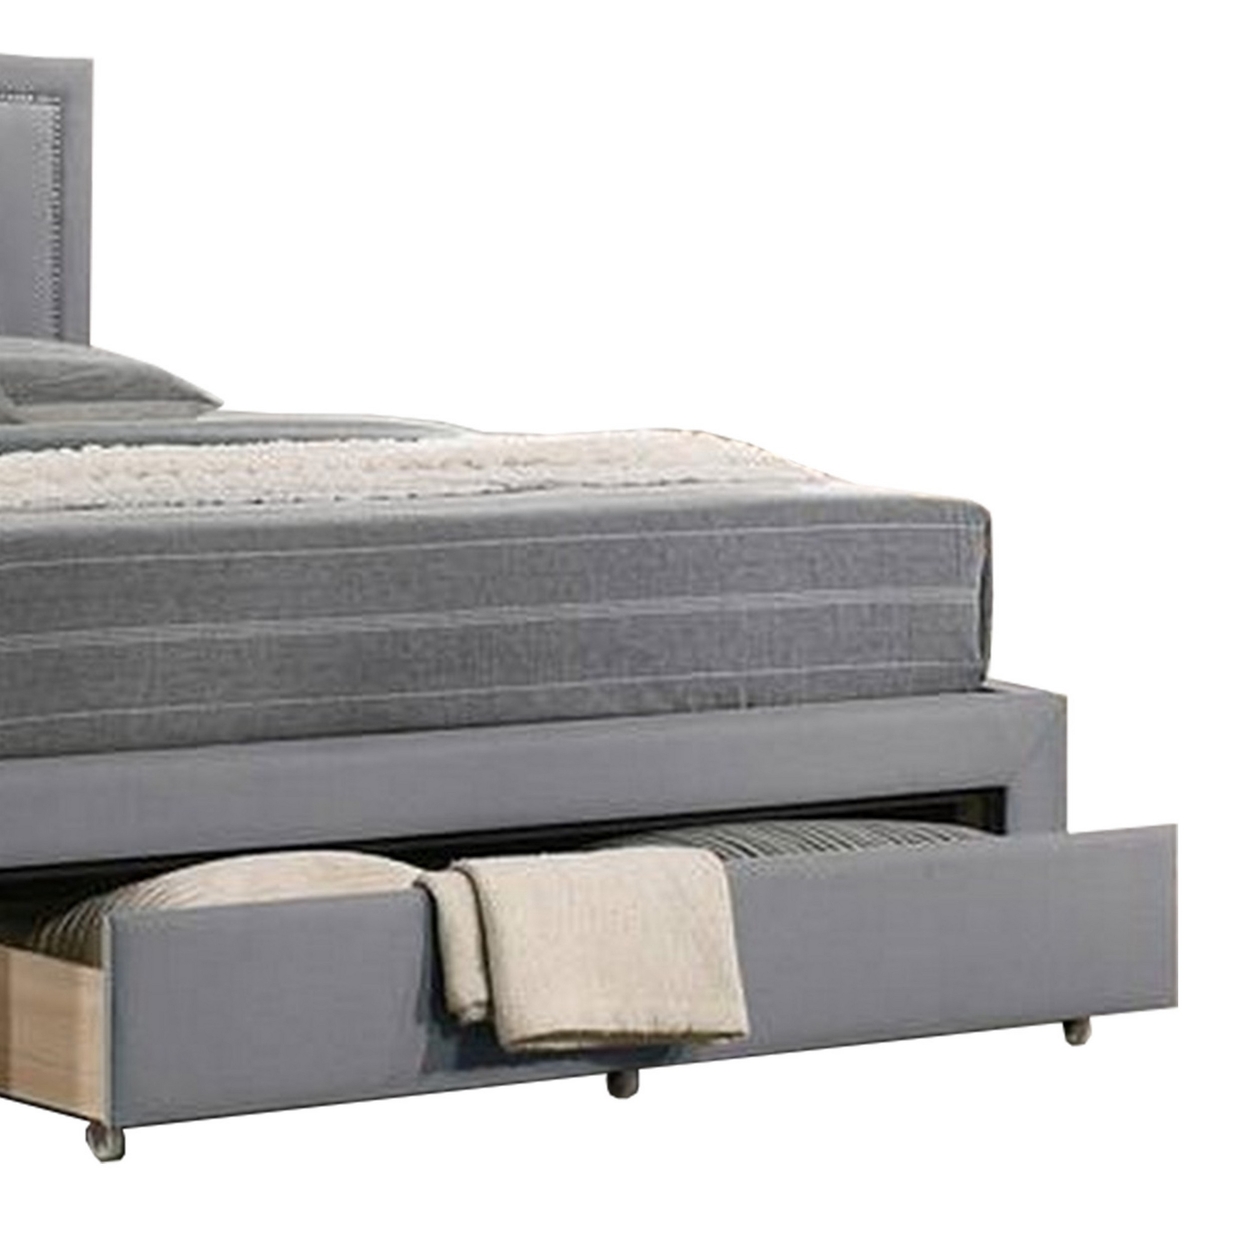 Buk Upholstered Tufted Twin Bed With Storage, Nailhead Trim, Gray Burlap - Saltoro Sherpi